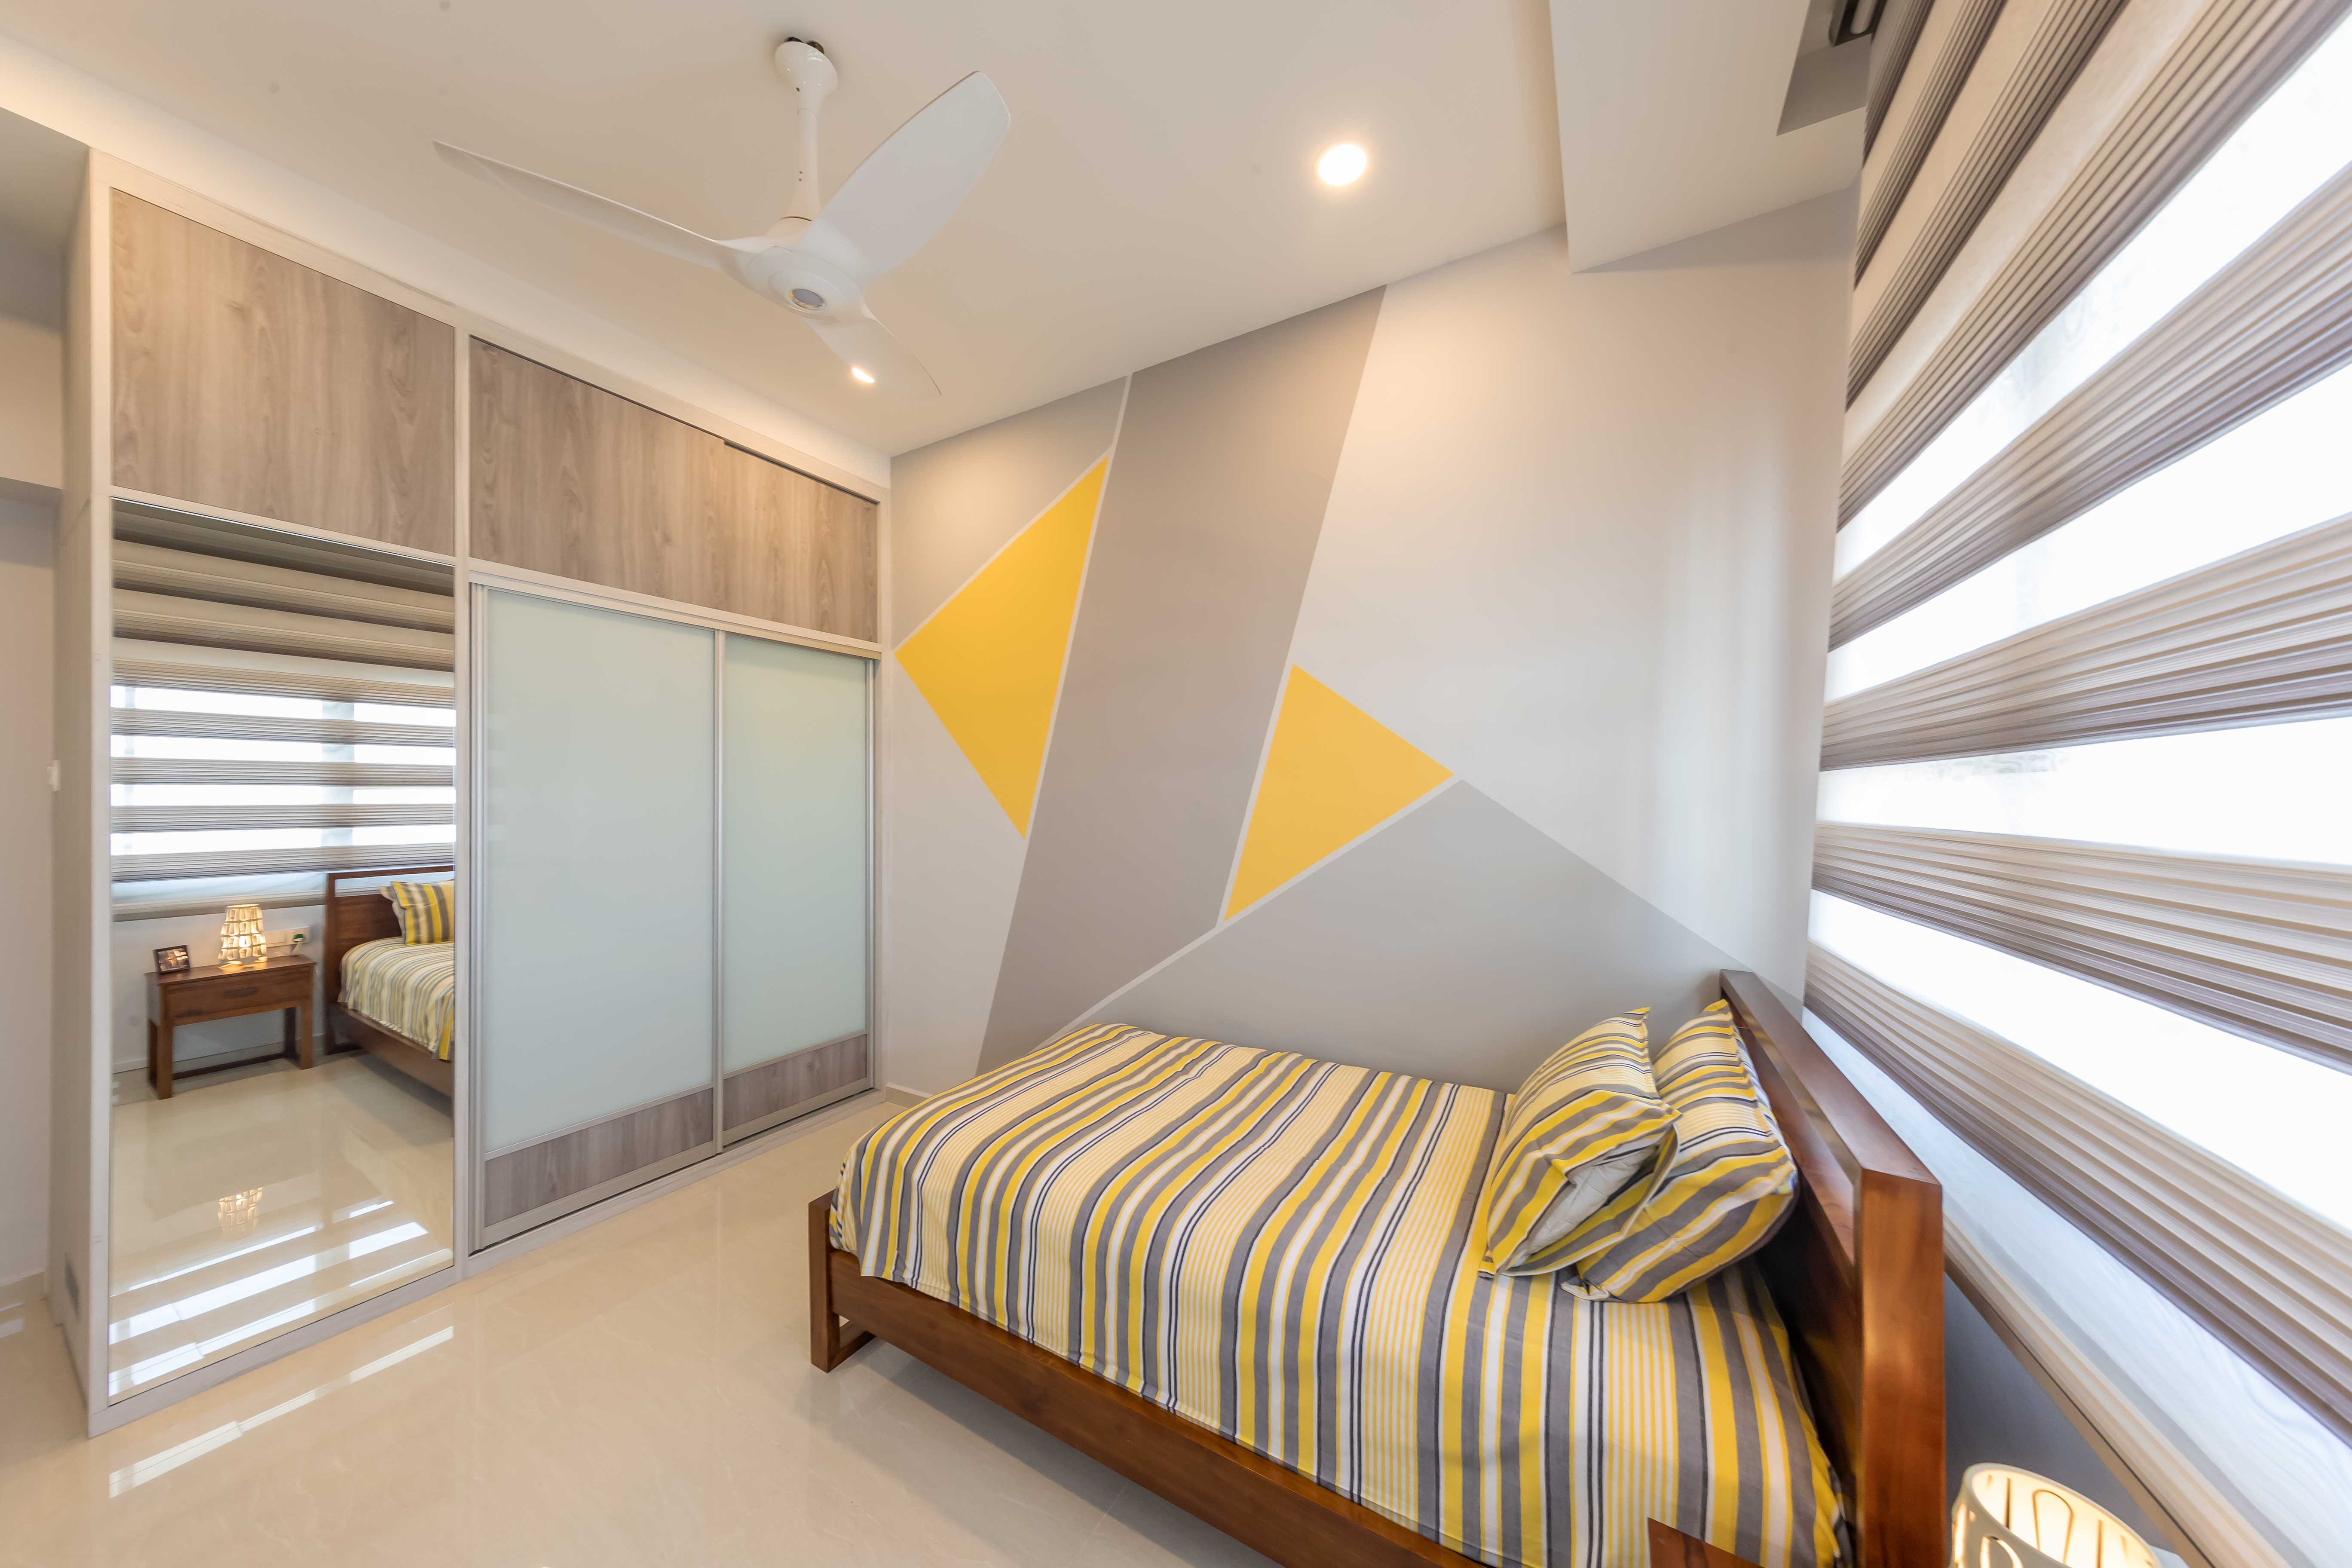 Contemporary, Modern Design - Bedroom - HDB 5 Room - Design by Home Concepts Interior & Design Pte Ltd